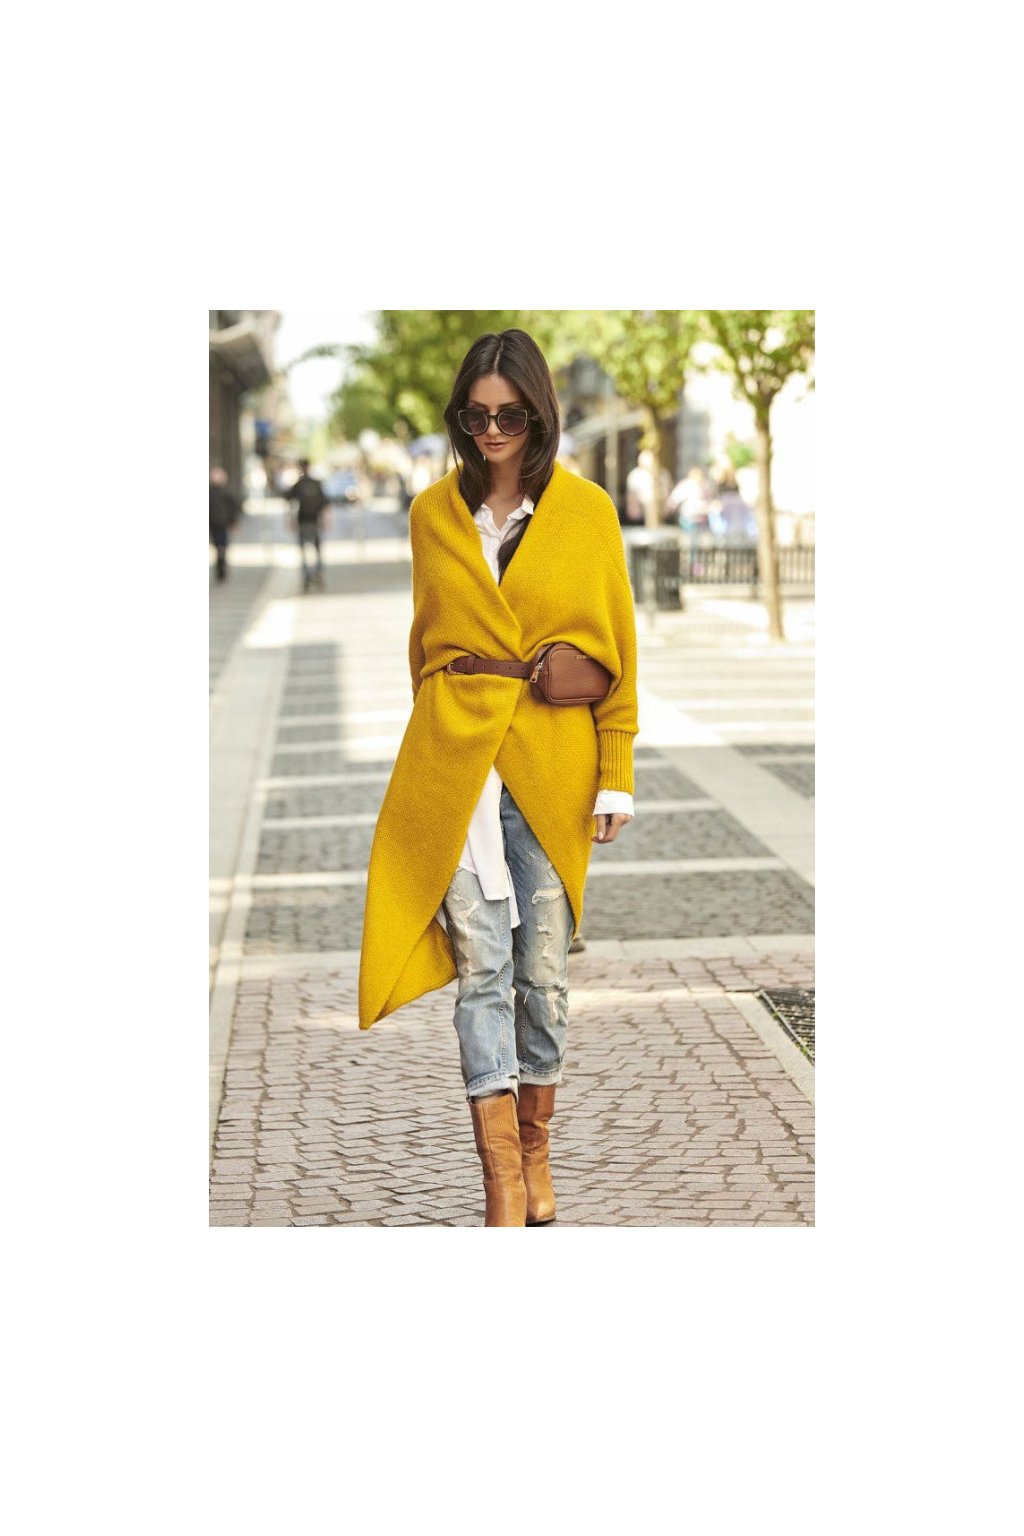 Dlhý vlněný sveter, pletený kabát LEA - fashionweek-moda.sk